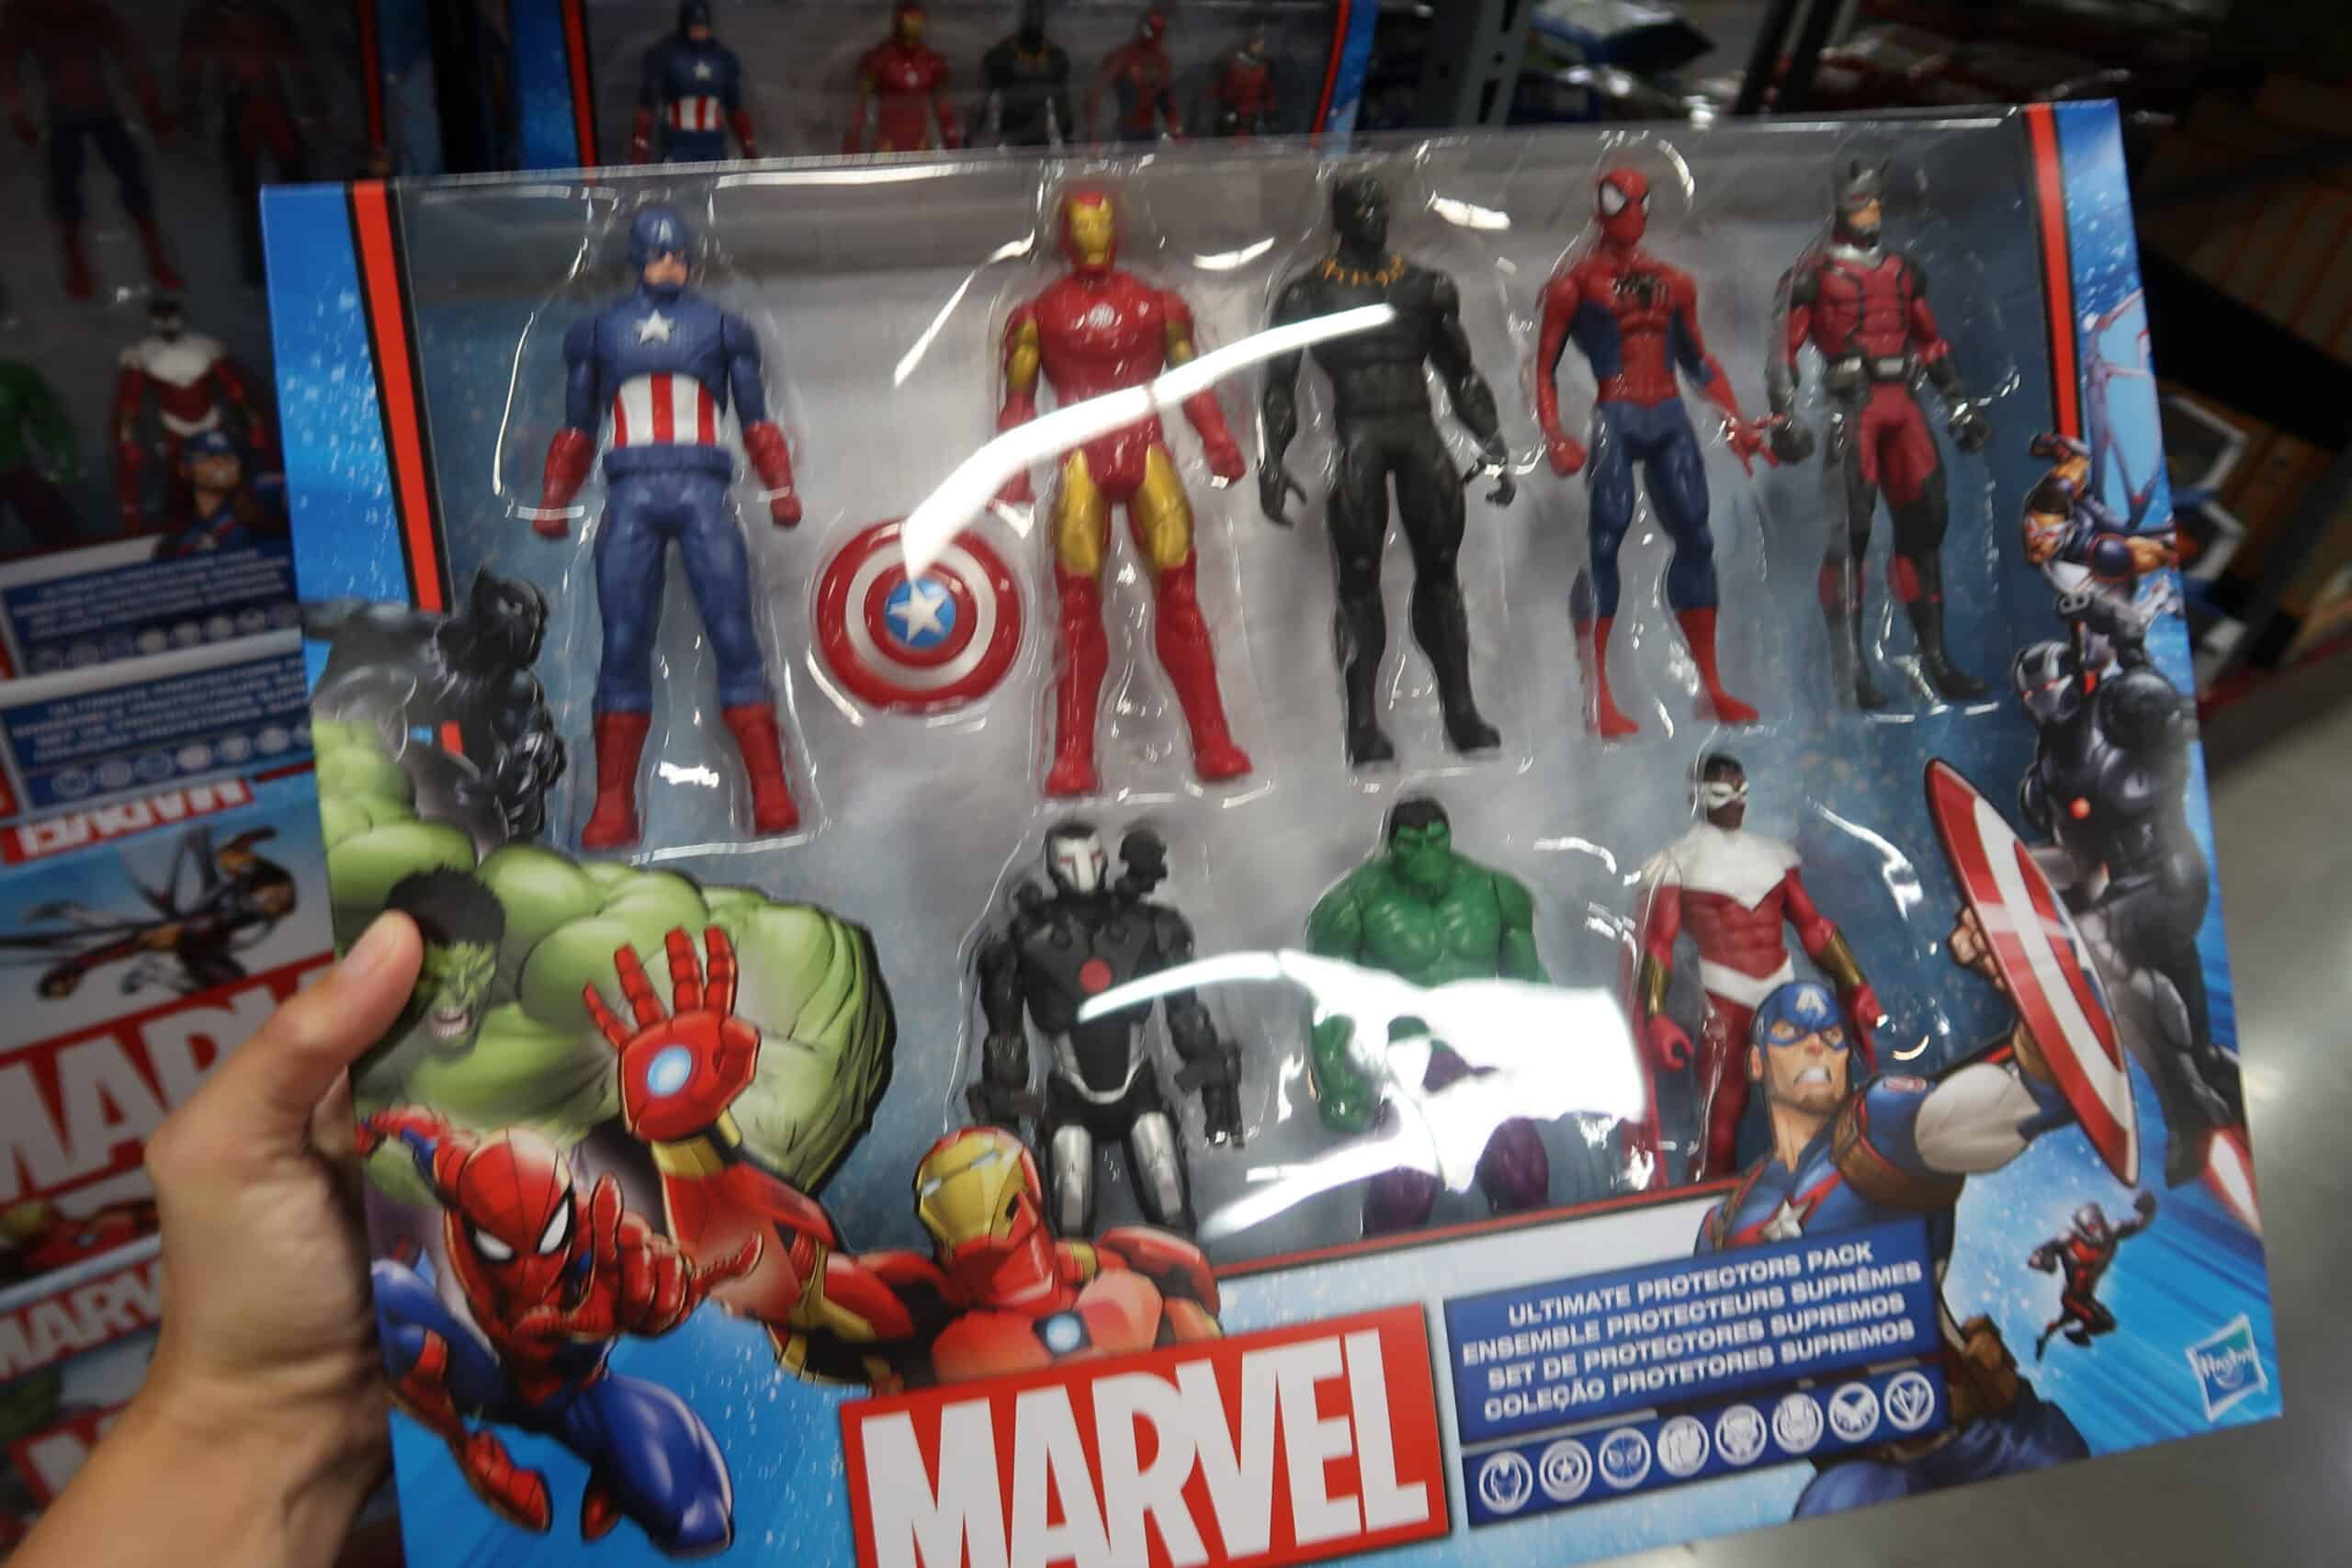 Marvel Action Figures 8 pk Set at BJ’s on Sale!